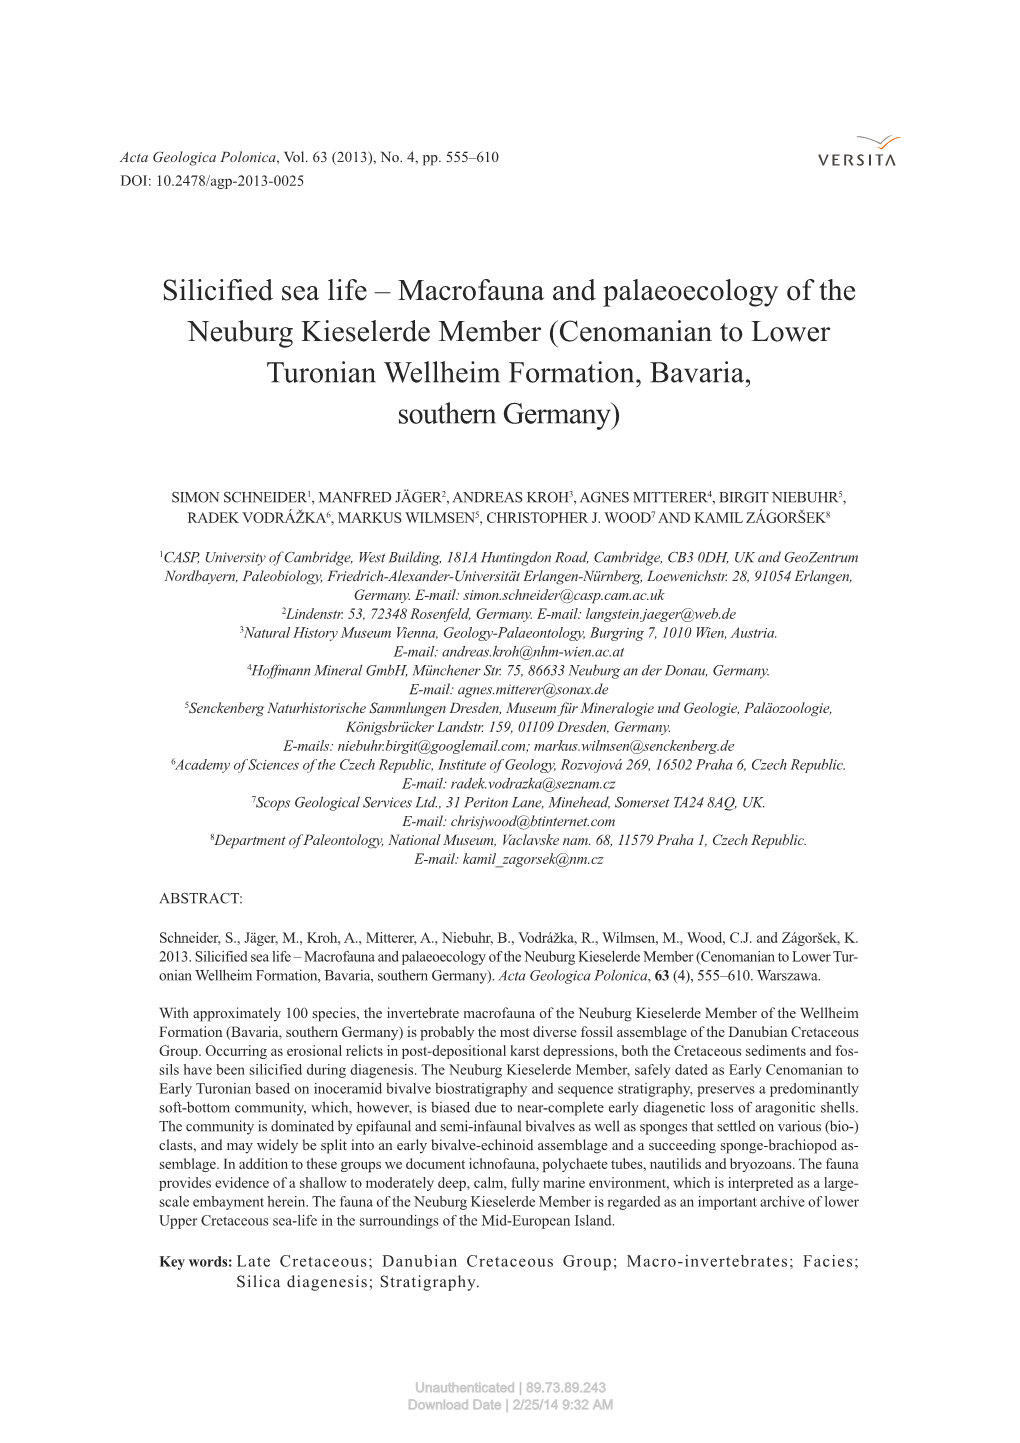 Macrofauna and Palaeoecology of the Neuburg Kieselerde Member (Cenomanian to Lower Turonian Wellheim Formation, Bavaria, Southern Germany)